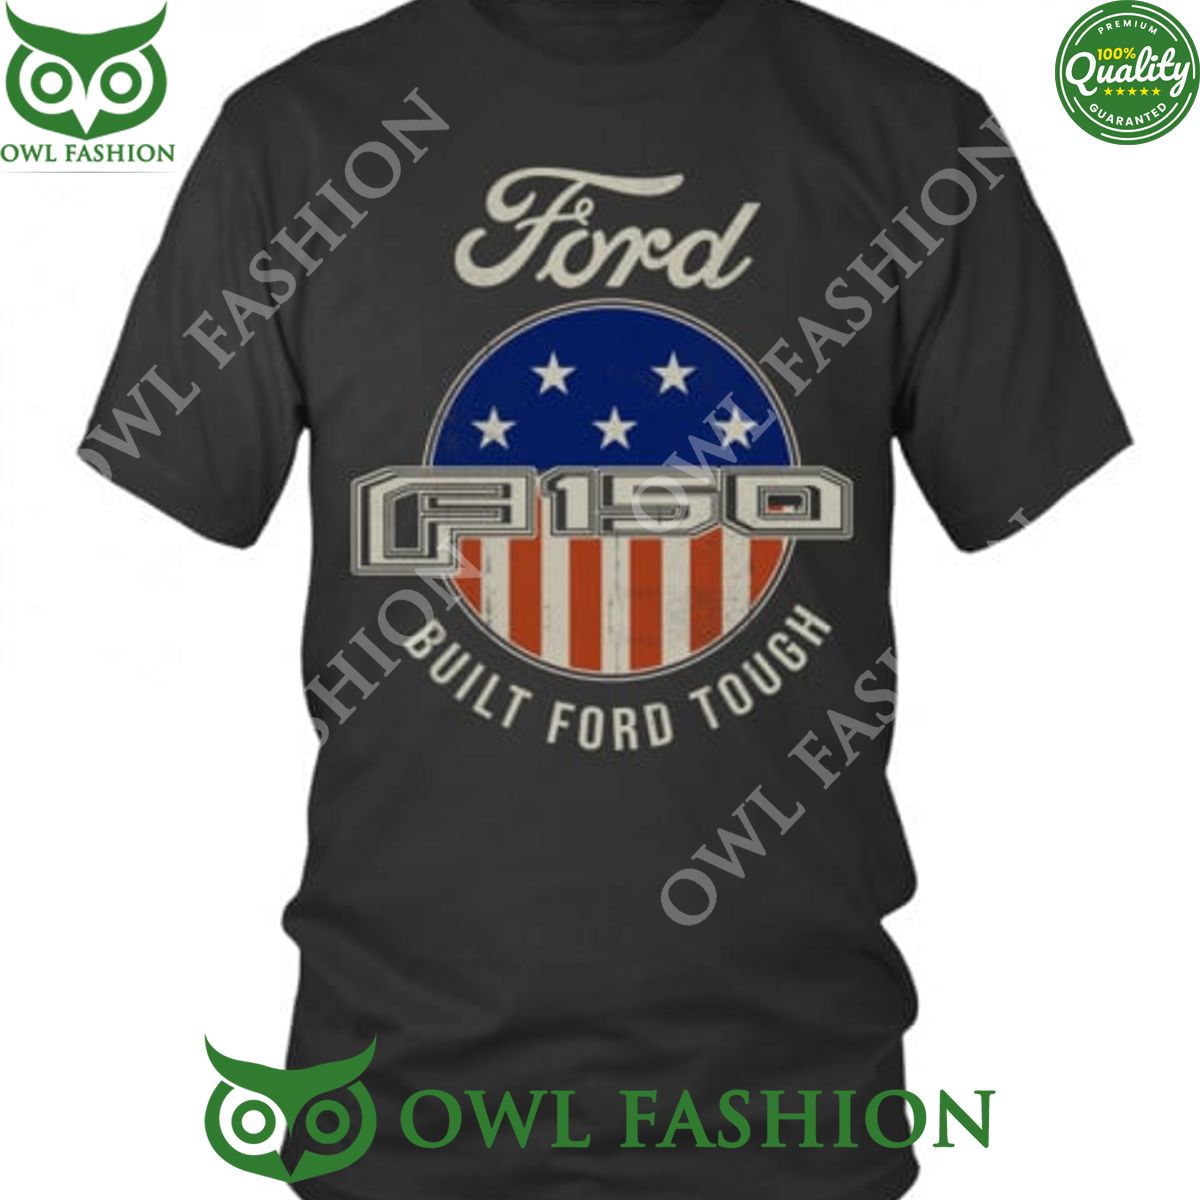 FORD F150 CAR BUILT FORD TOUGH AMERICAN FLAG t shirt